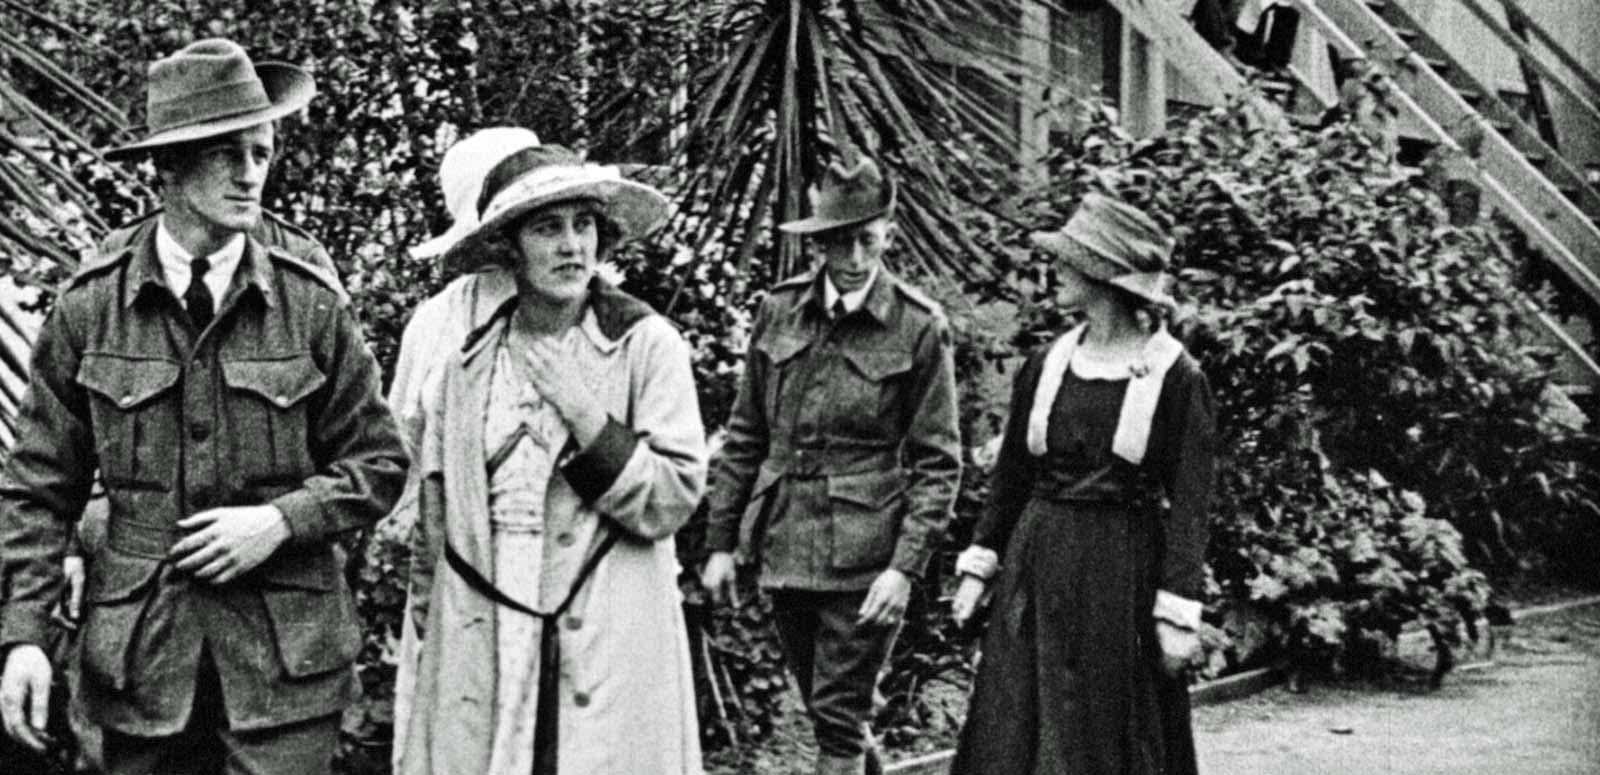 Two Australian soldiers from the First World War walk in uniform, accompanied by three women